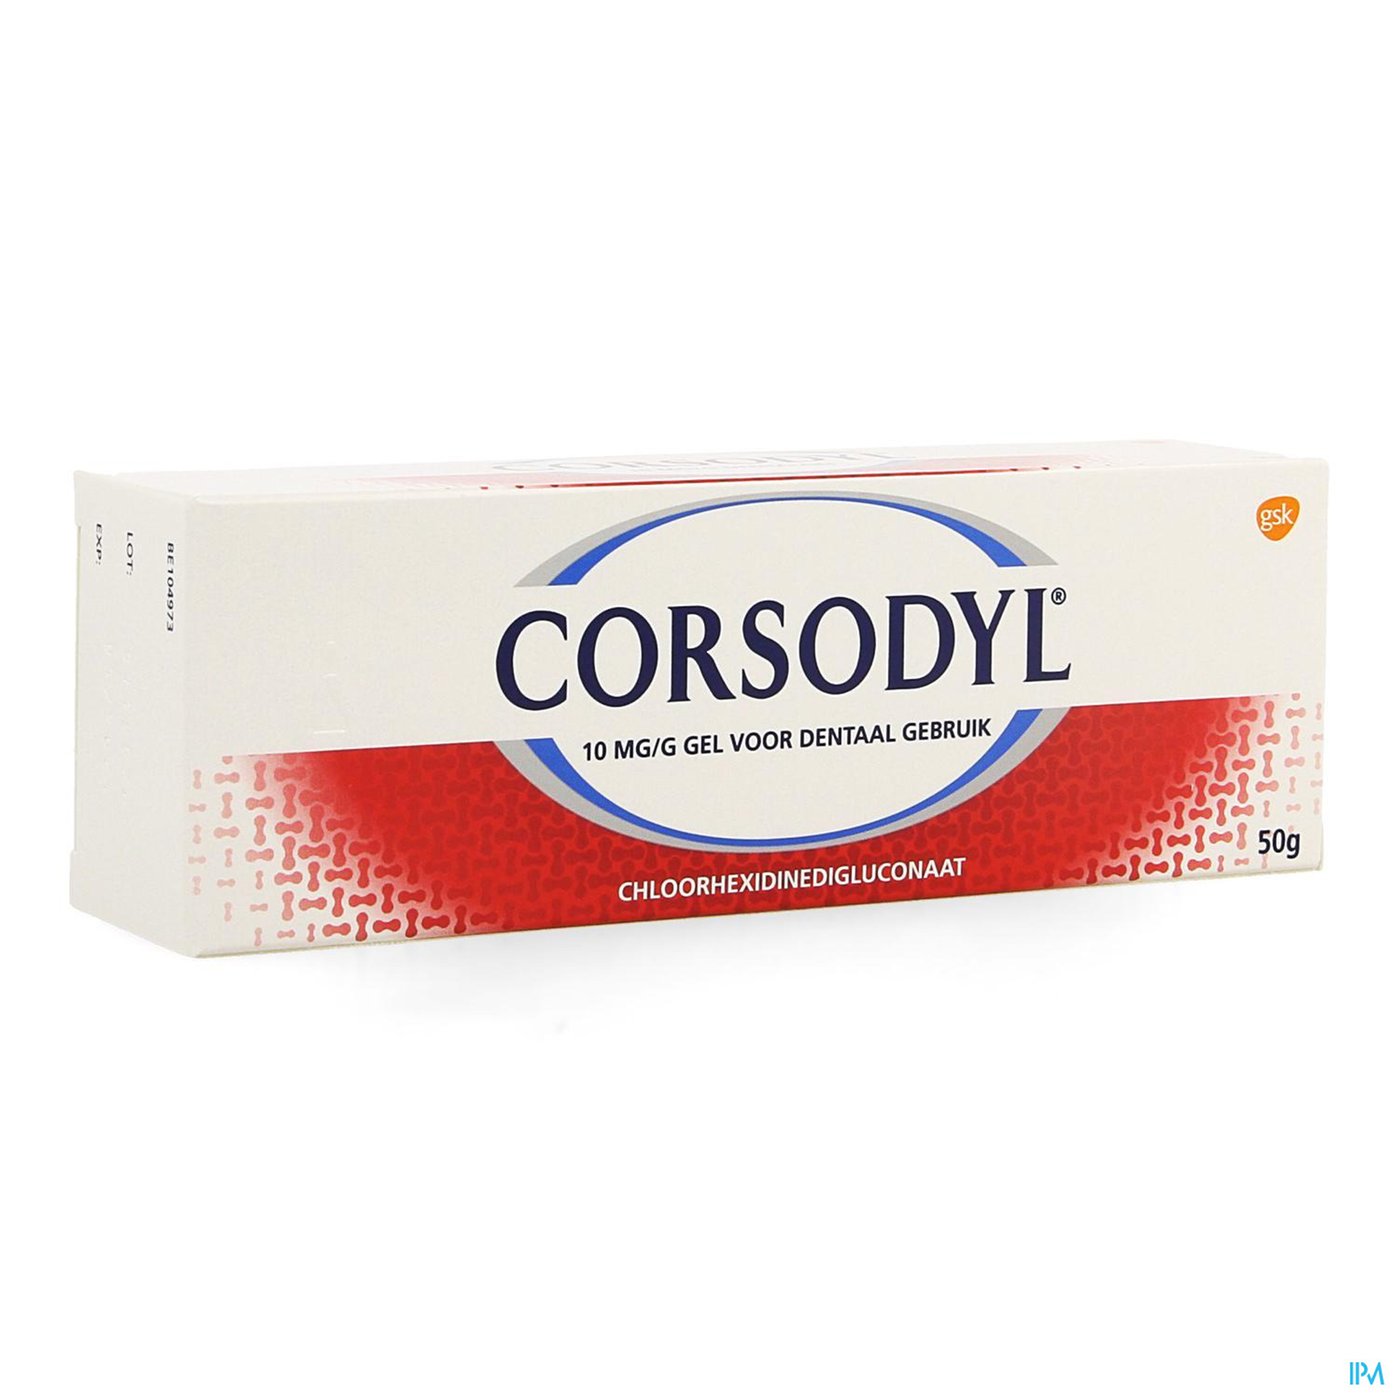 Corsodyl 10mg/g Tandgel Tube 50g packshot